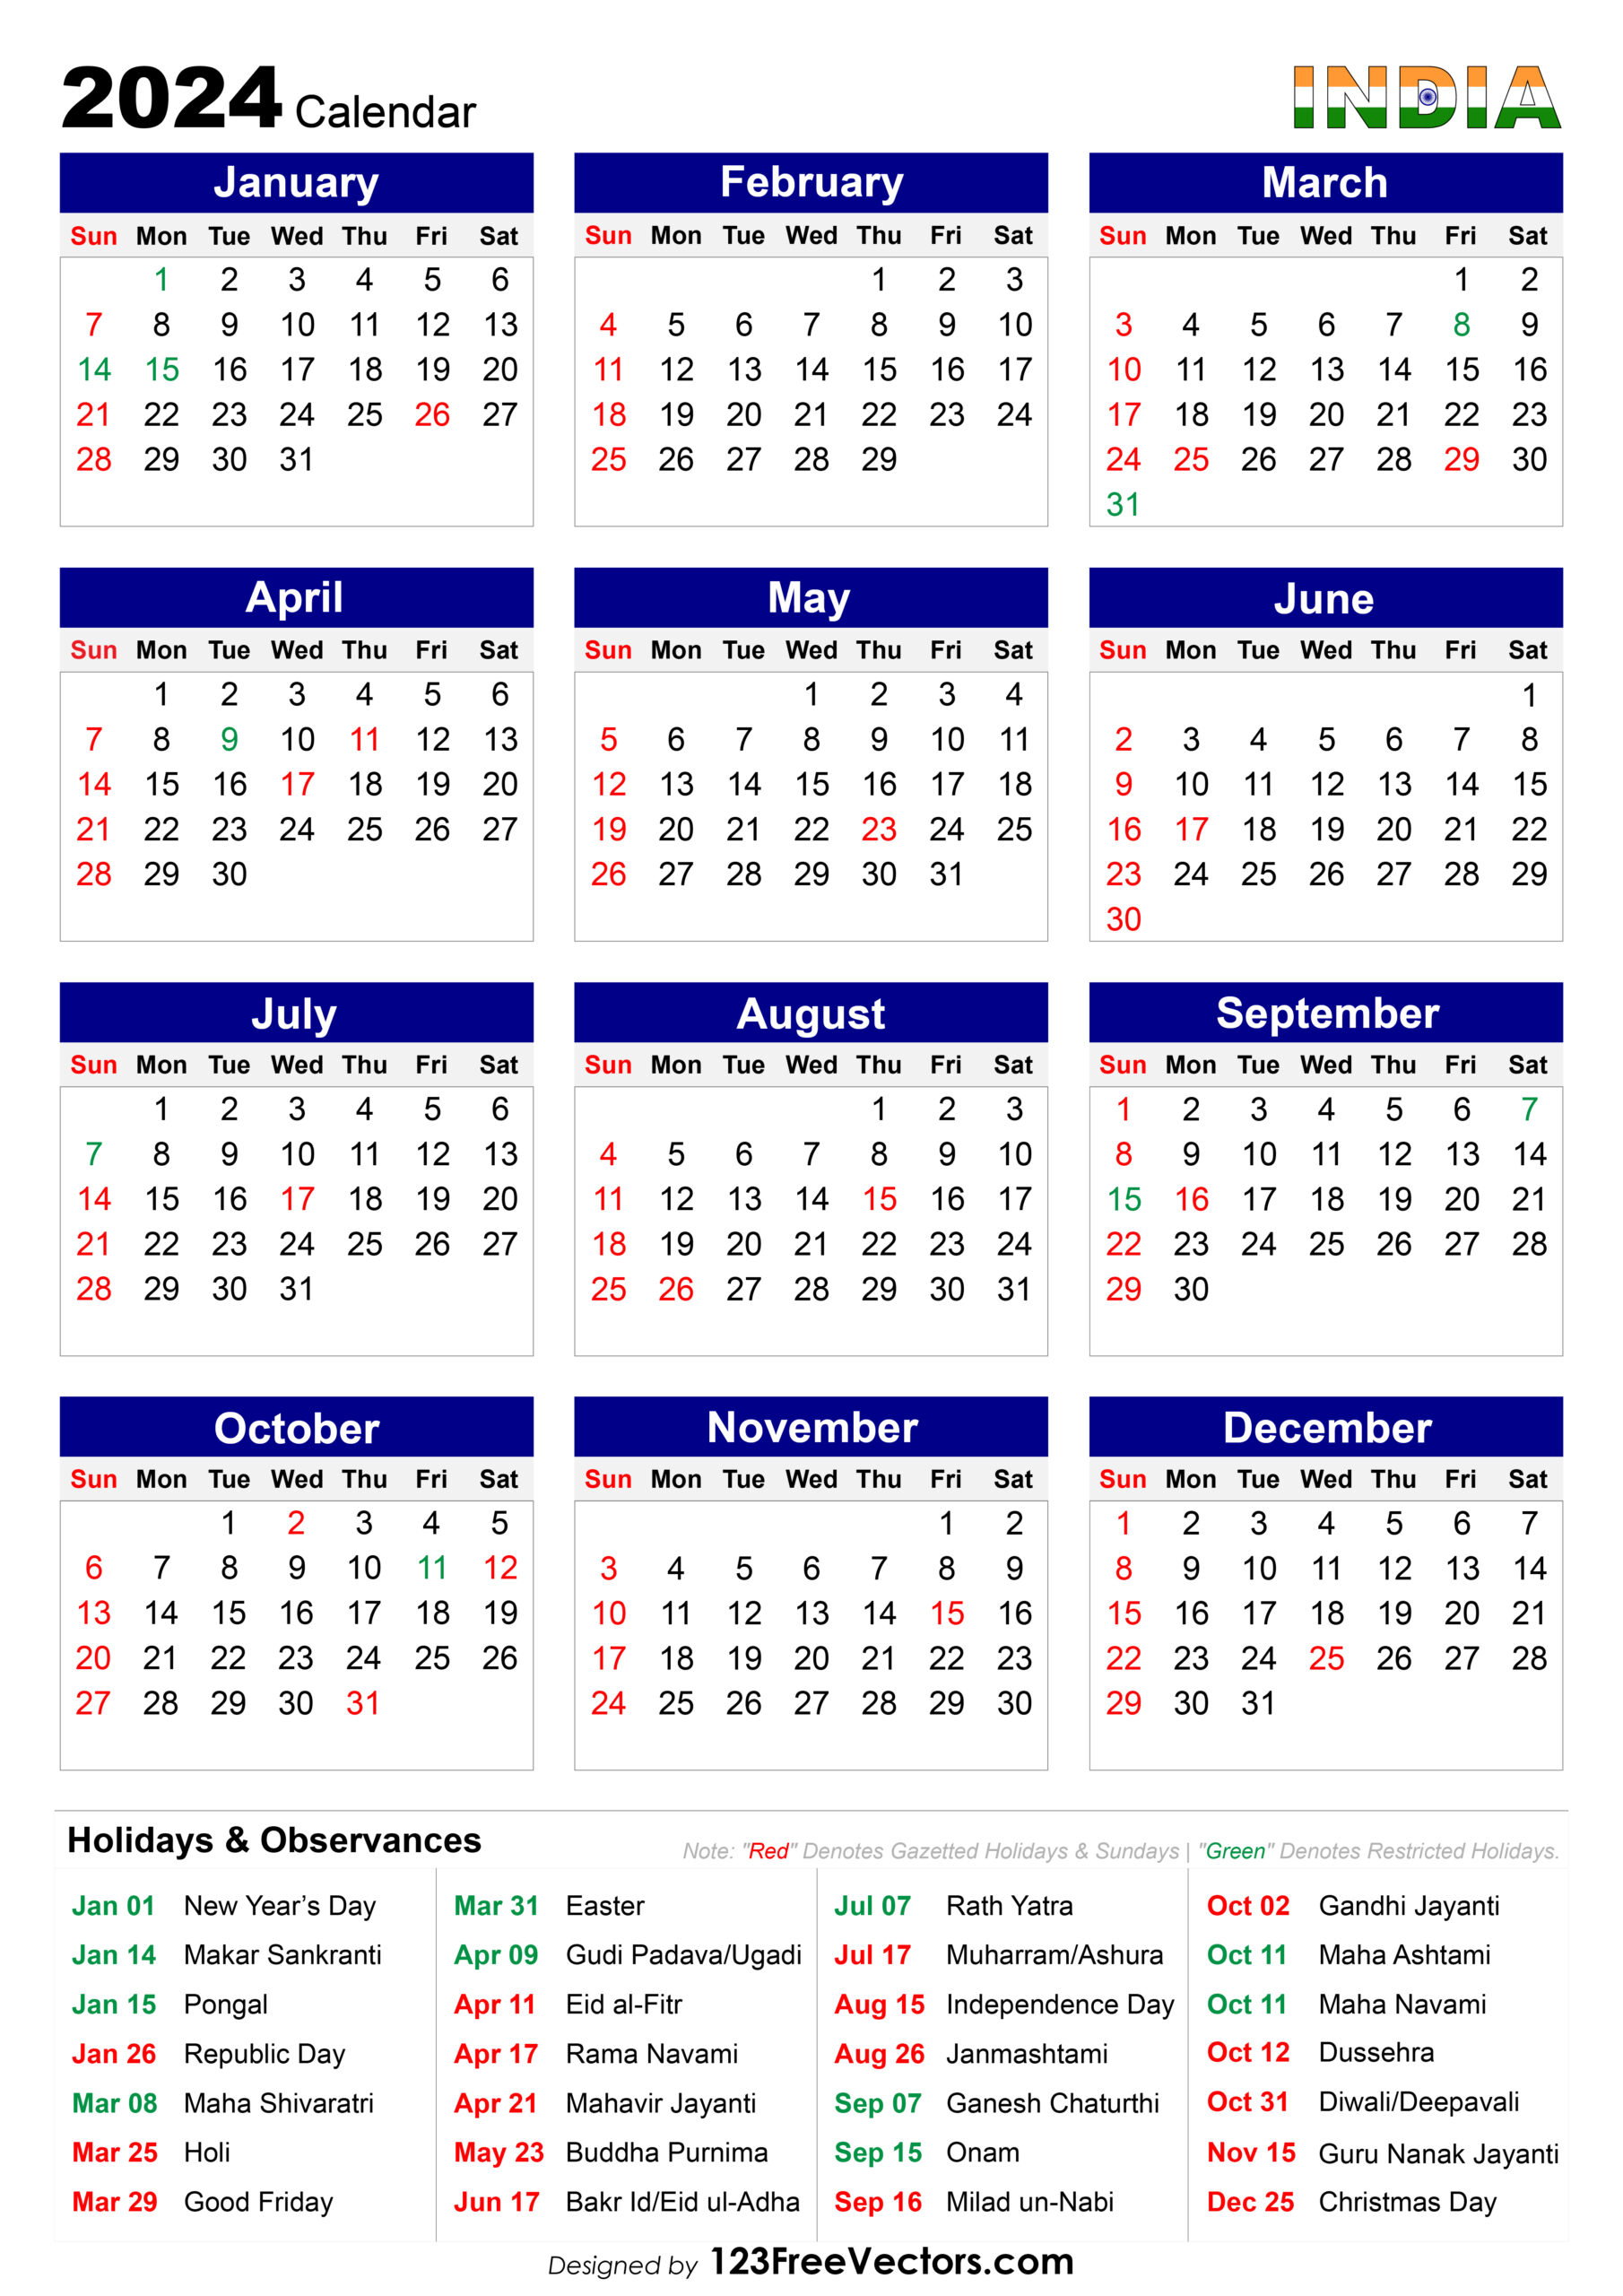 Free 2024 Calendar India | Printable Calendar 2024 India With Holidays And Festivals